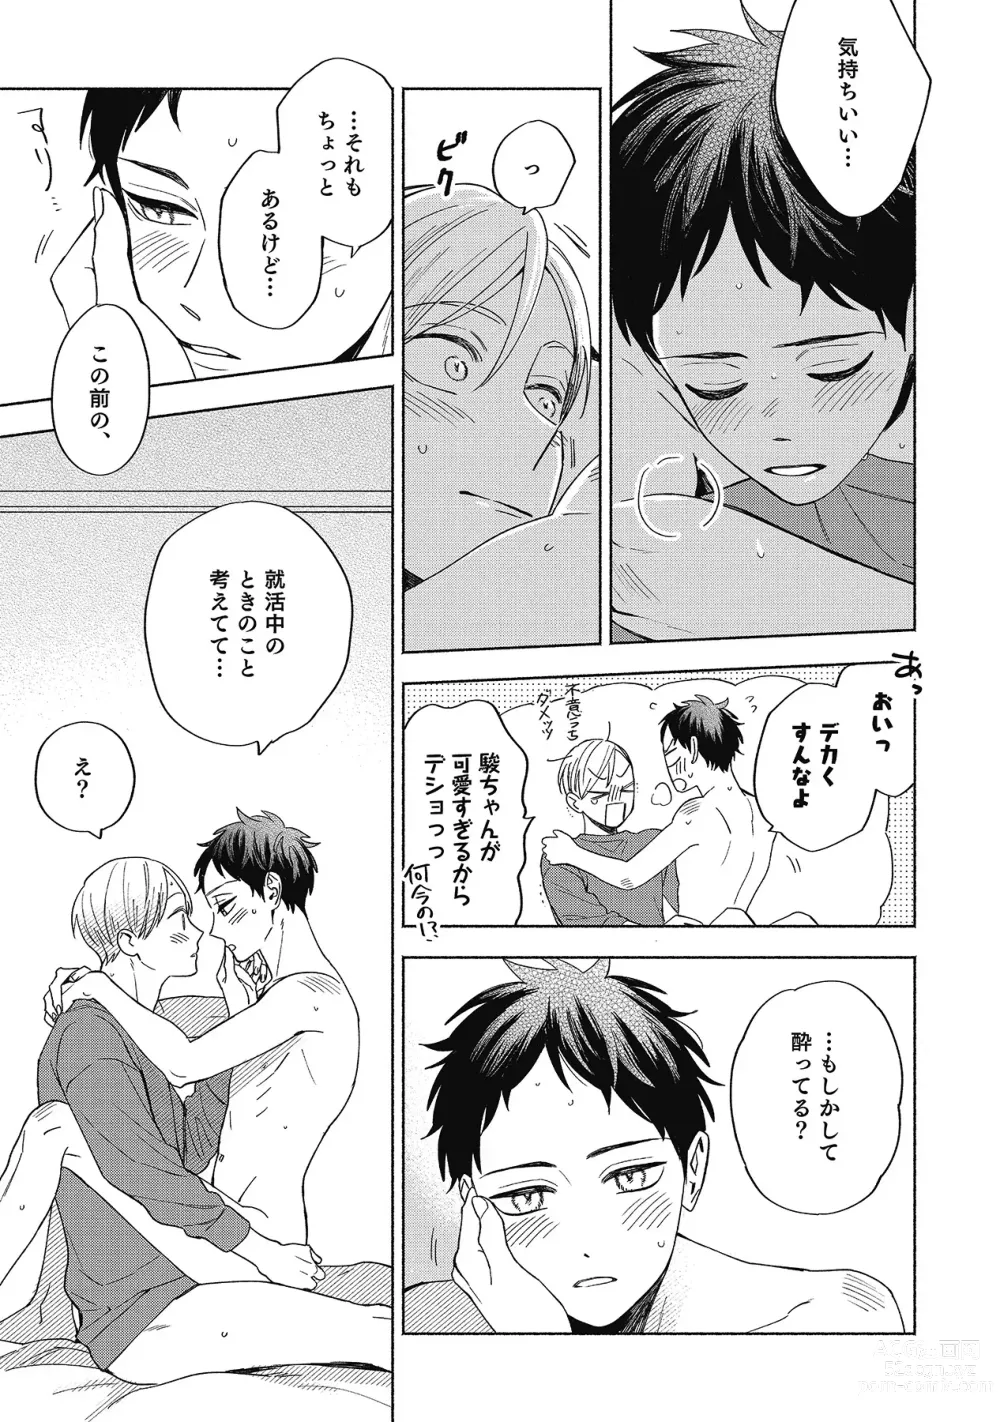 Page 163 of manga Sentimental Darling